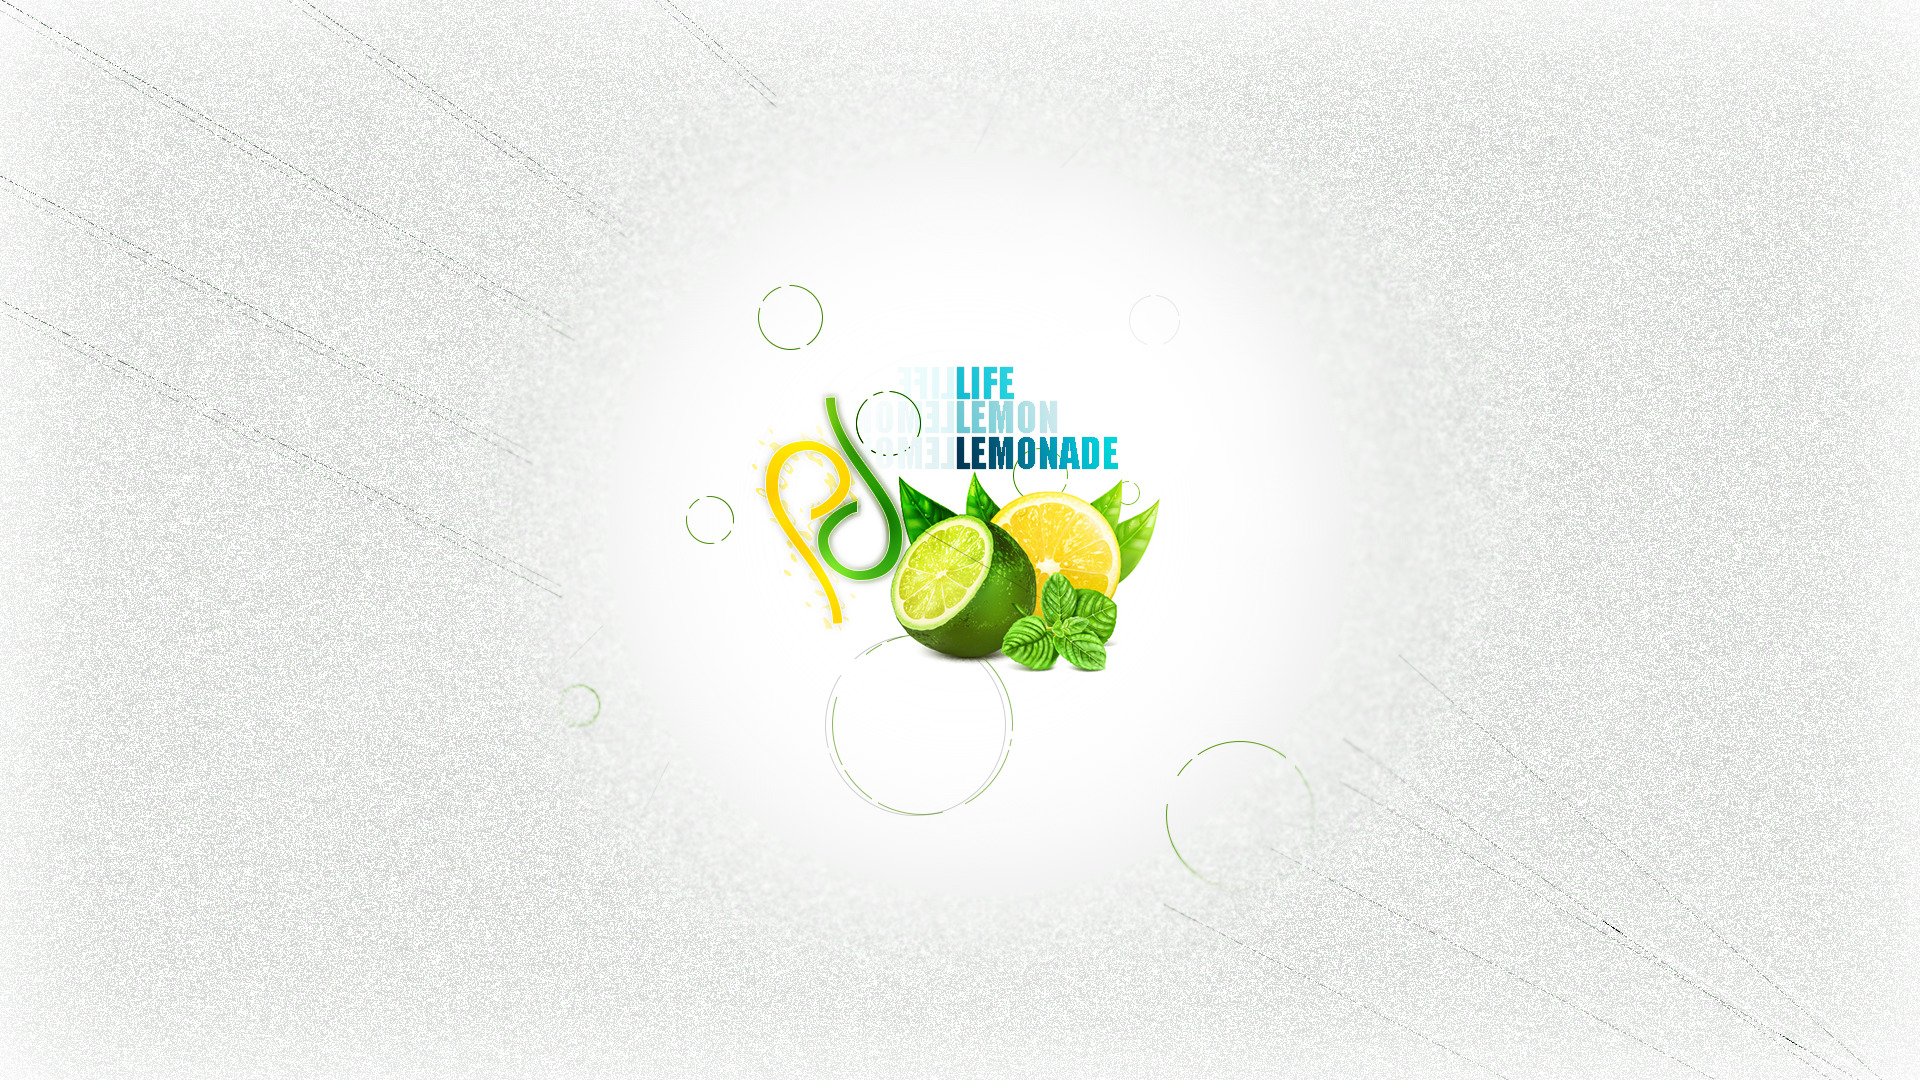 Lemonade, Life, Lemon, Lemons, Green, Yellow, Abstract, Circle Wallpaper